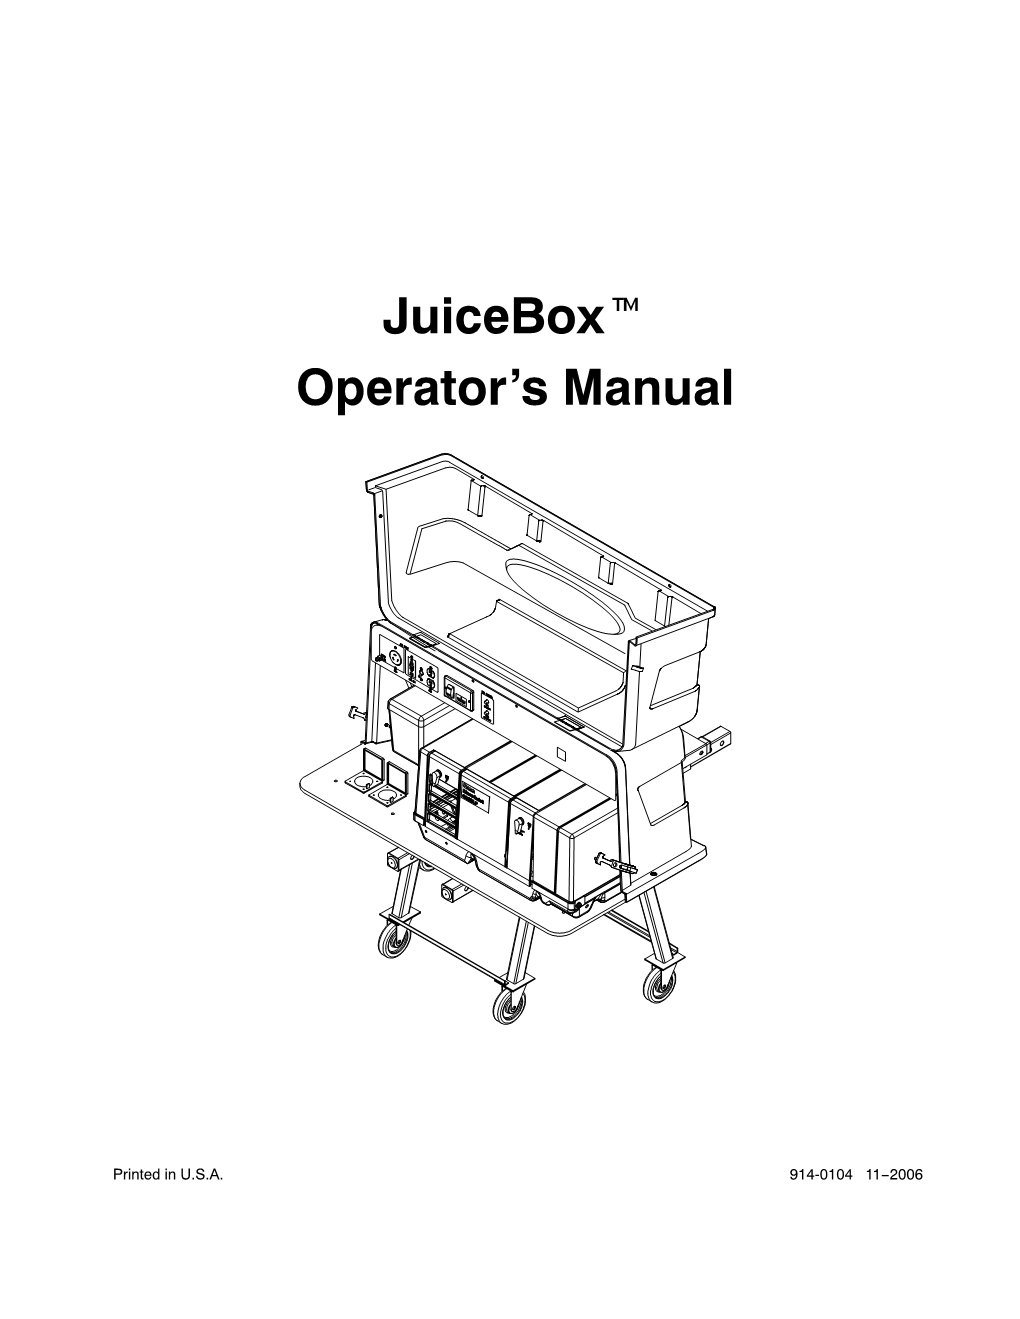 Juiceboxt Operator's Manual